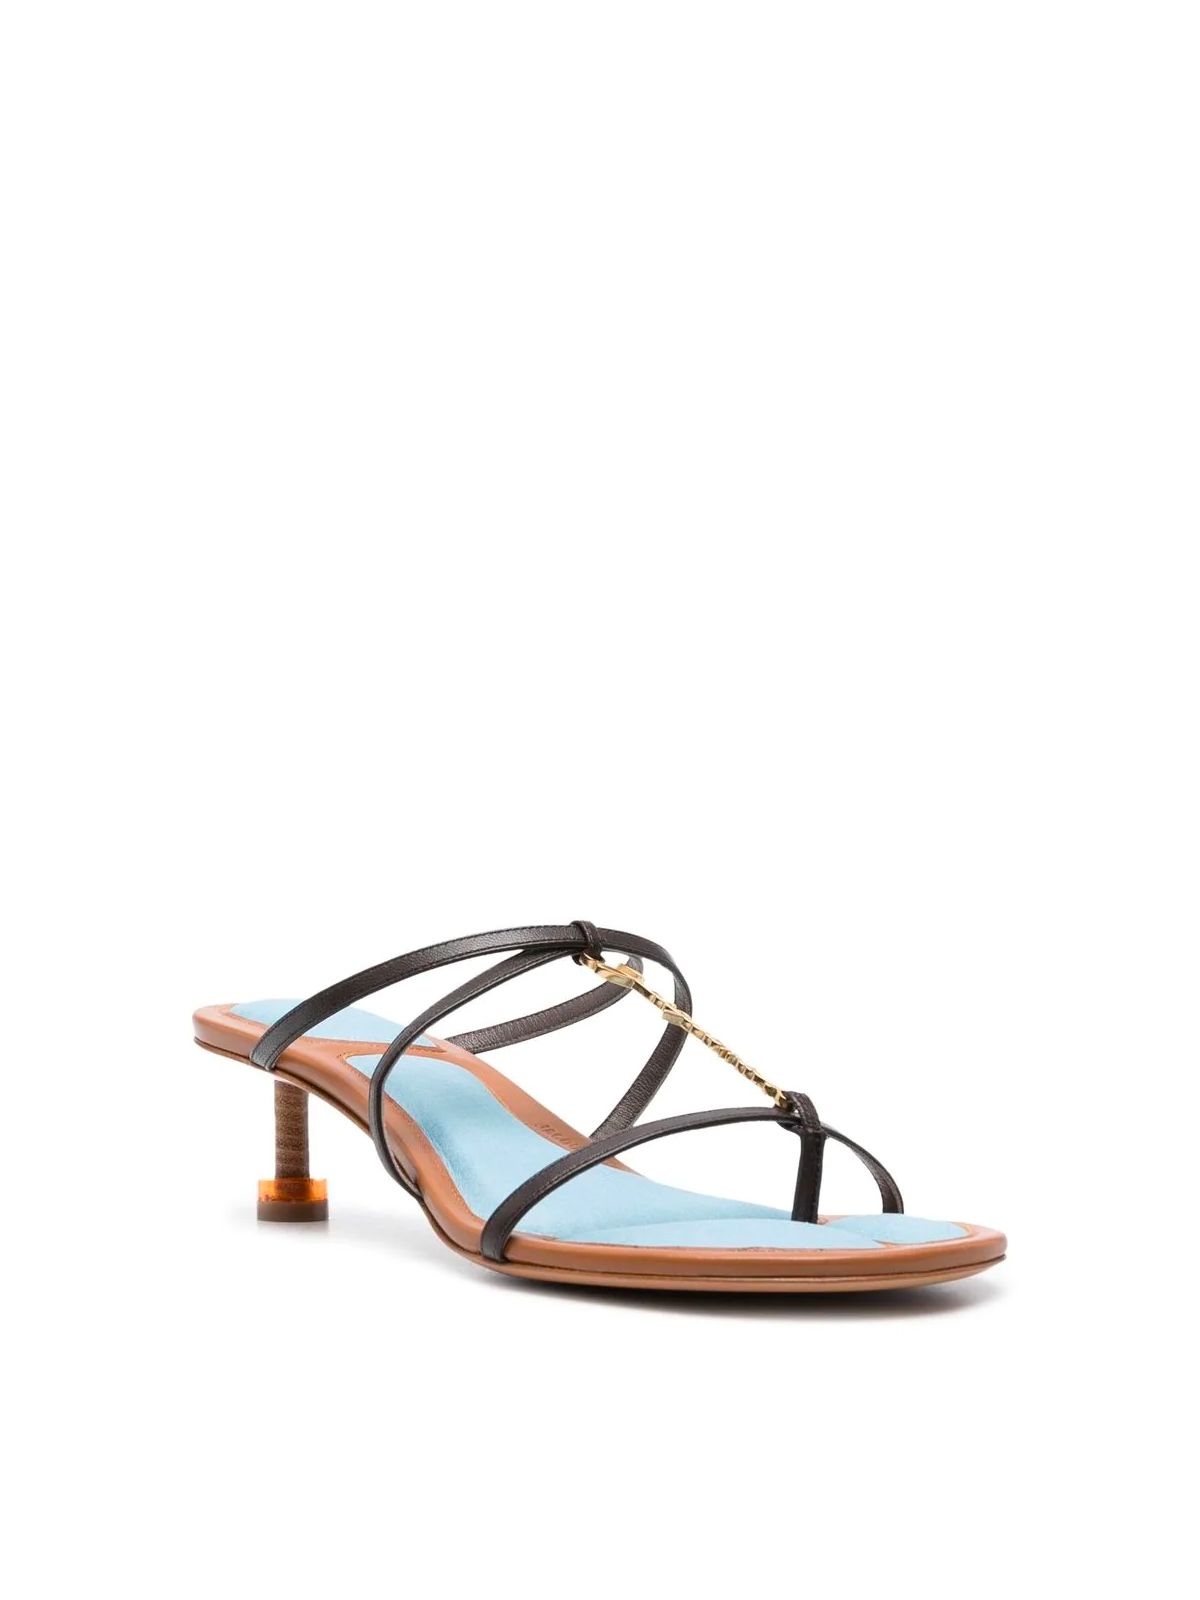 Shop Jacquemus Women's Sandals: Pralu